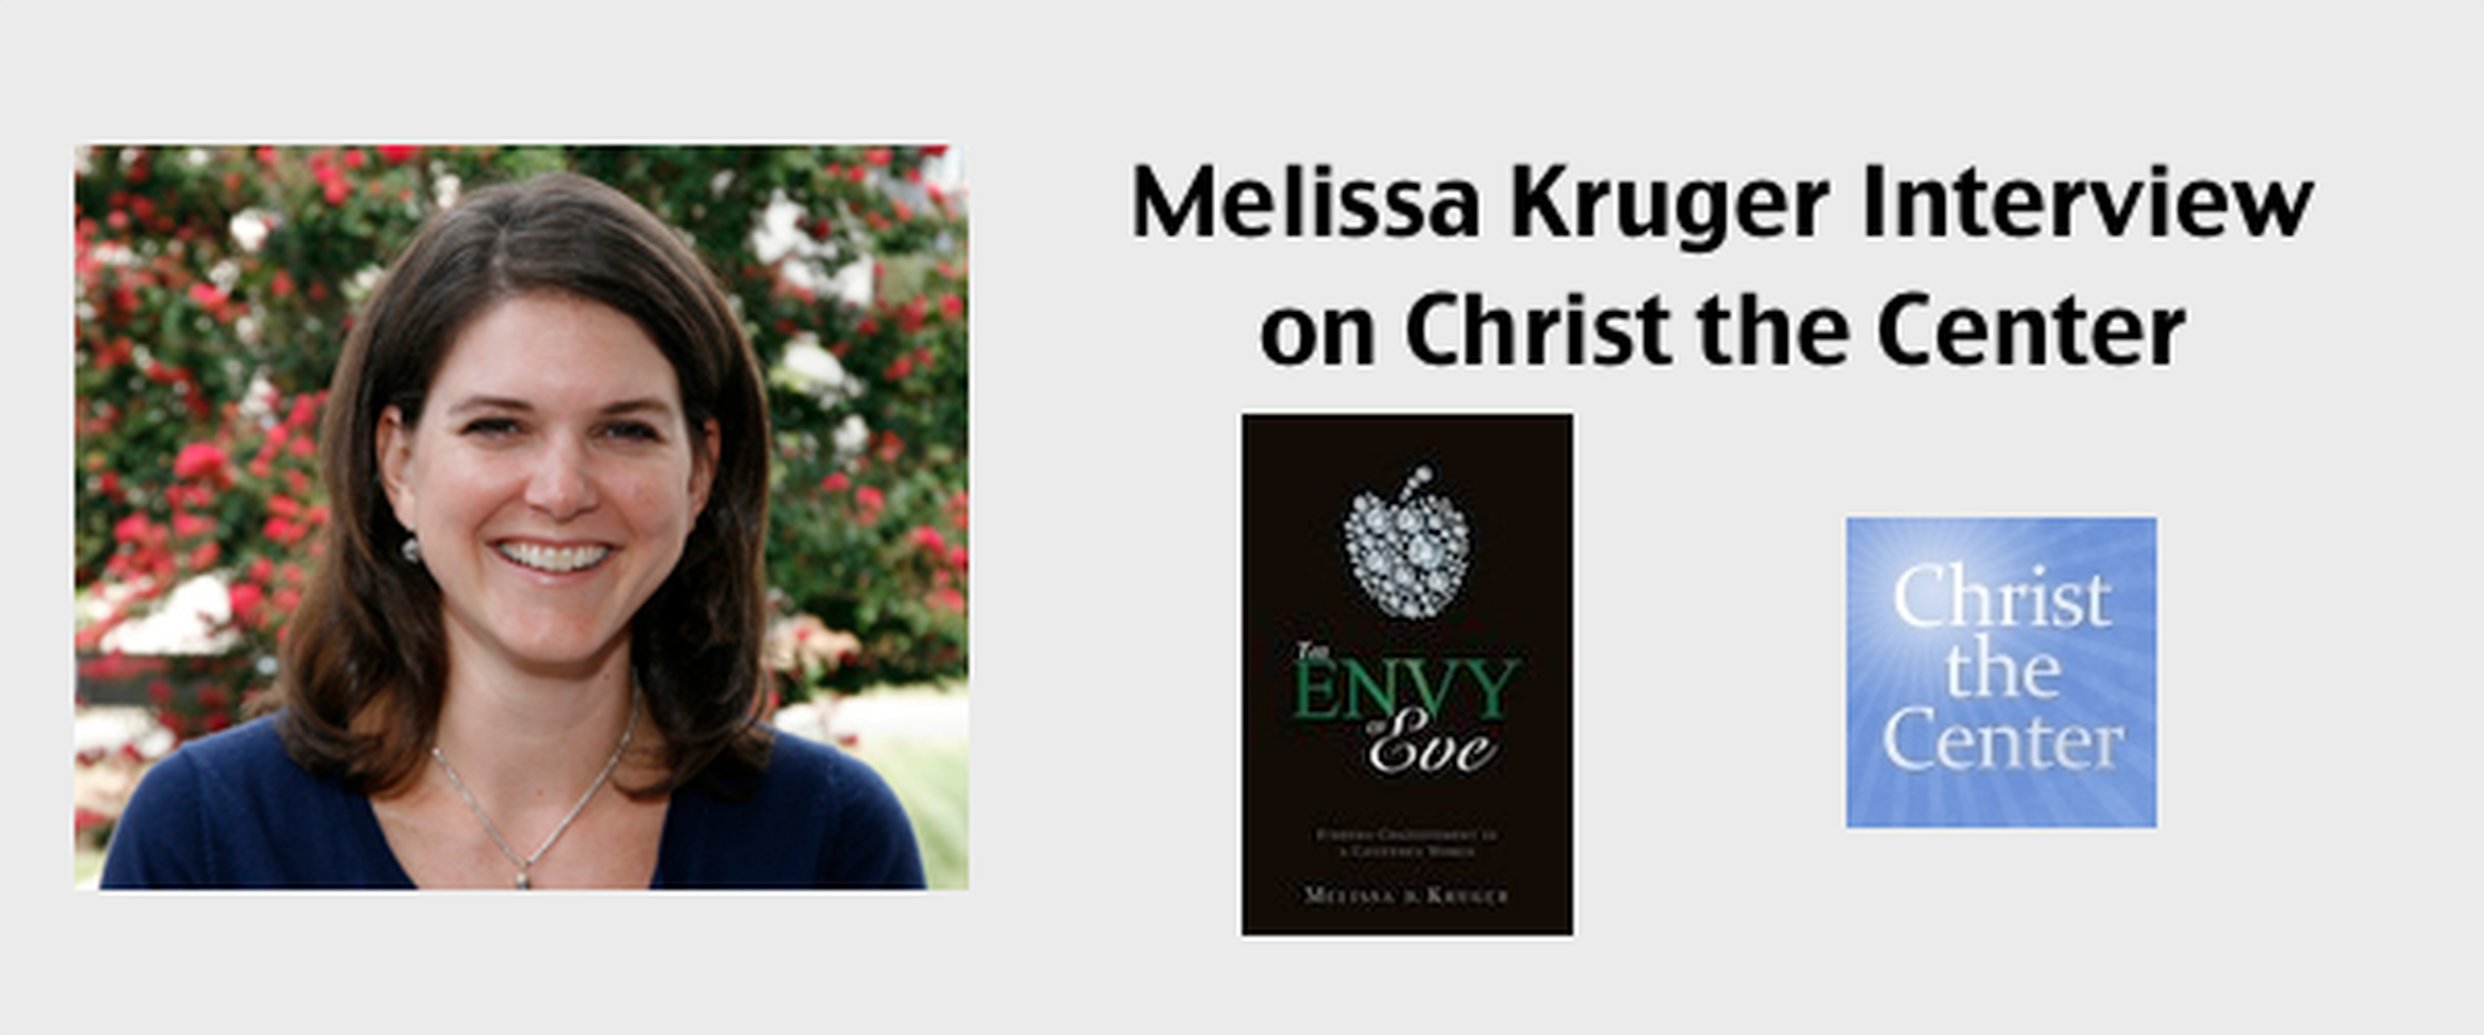 Melissa Kruger Interview on Christ the Center